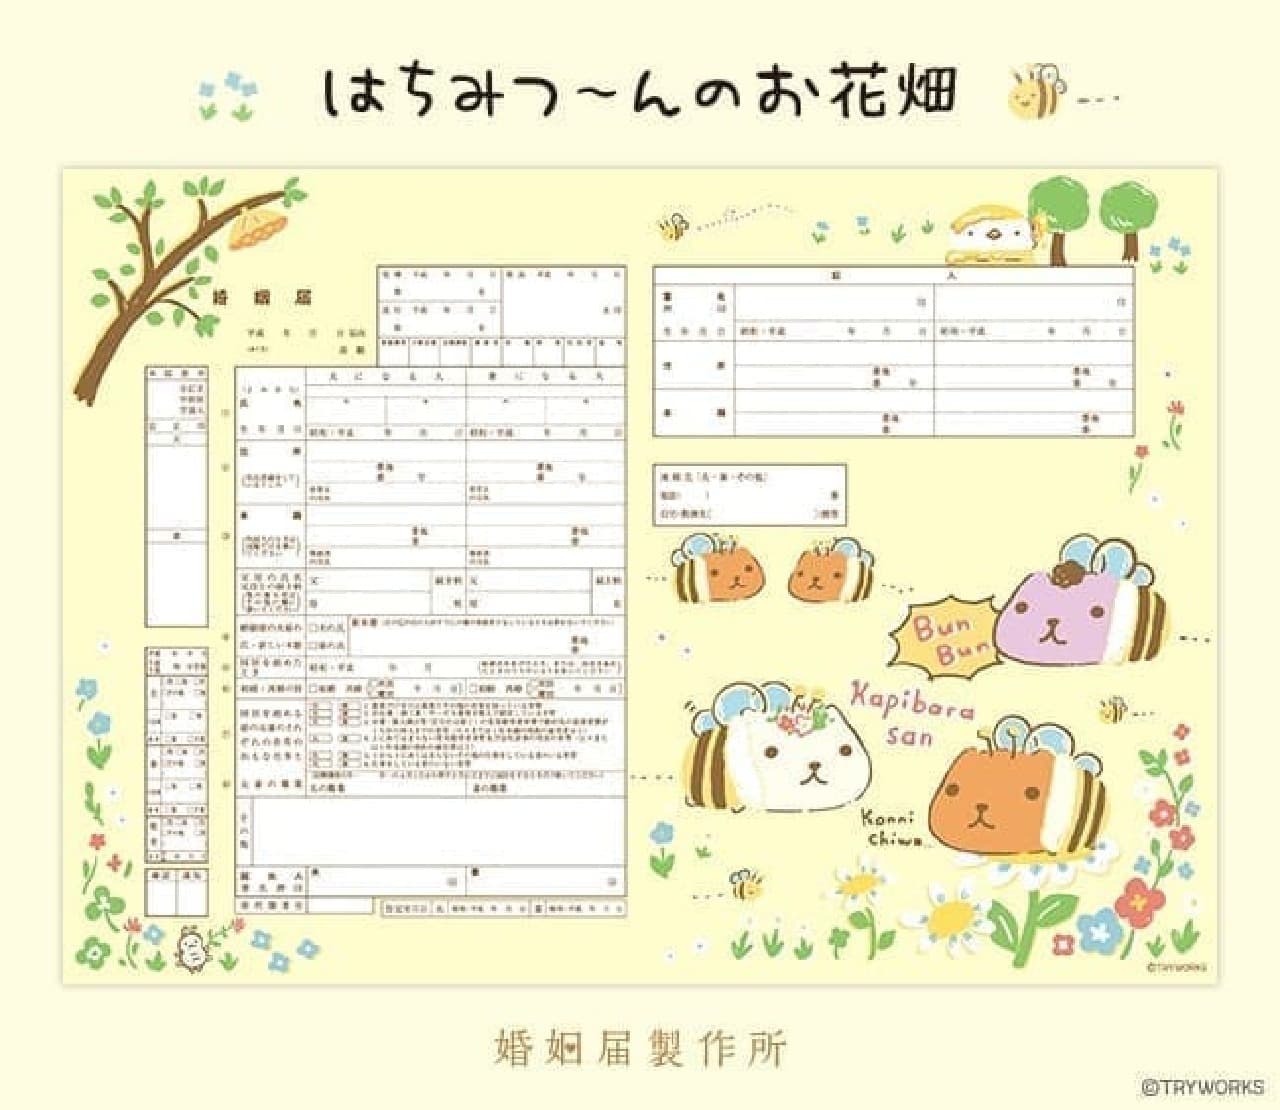 Marriage registration designed by "Kapibara-san"